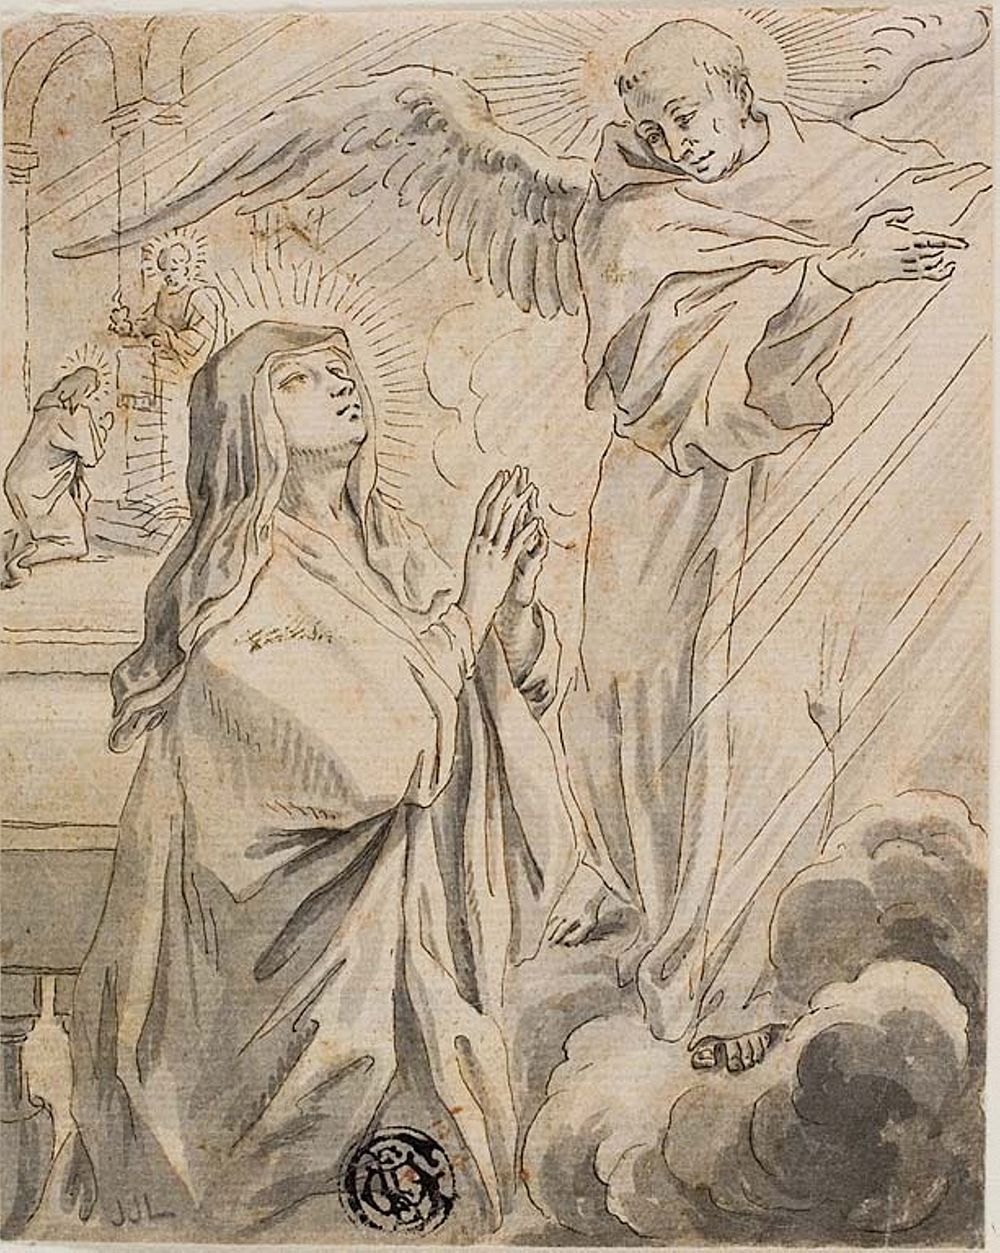 The Annunciation by Gerard de Lairesse